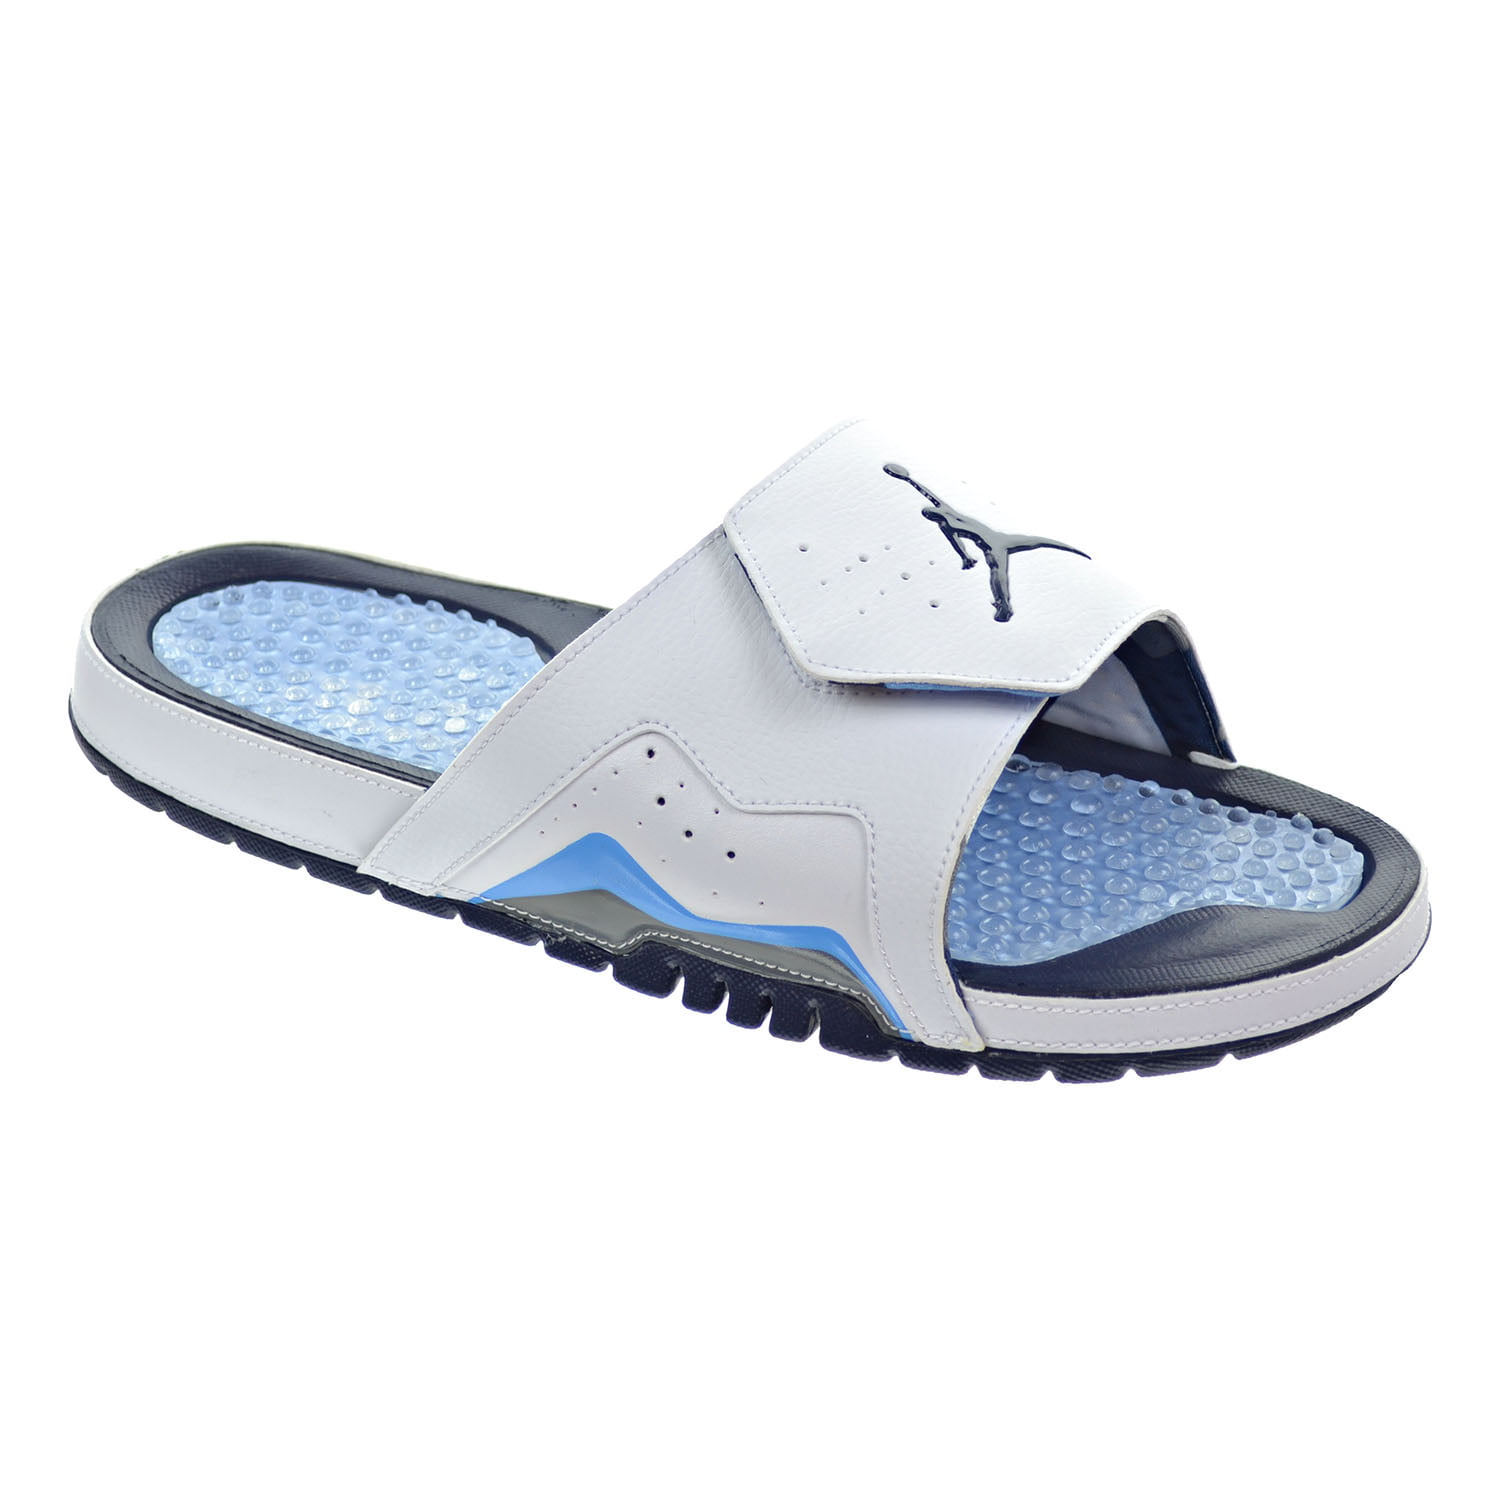  Jordan  Jordan  Hydro VII Retro Men s Sandals  White 